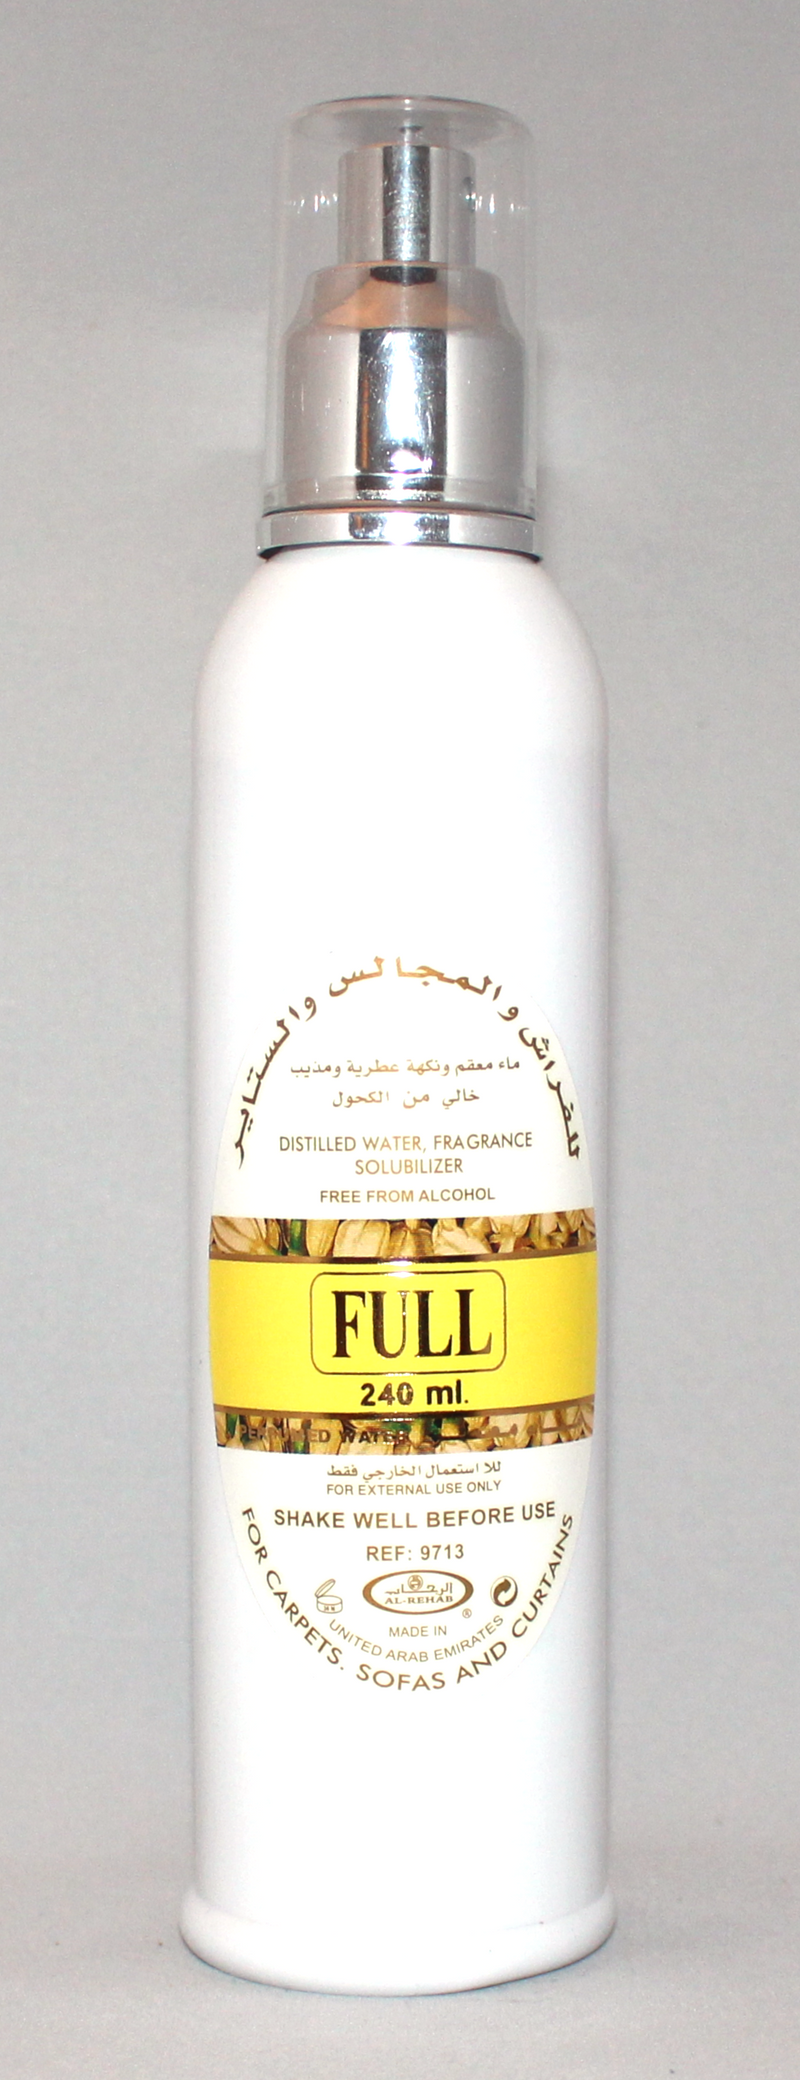 Full - Room Freshener by Al-Rehab (240 ml)